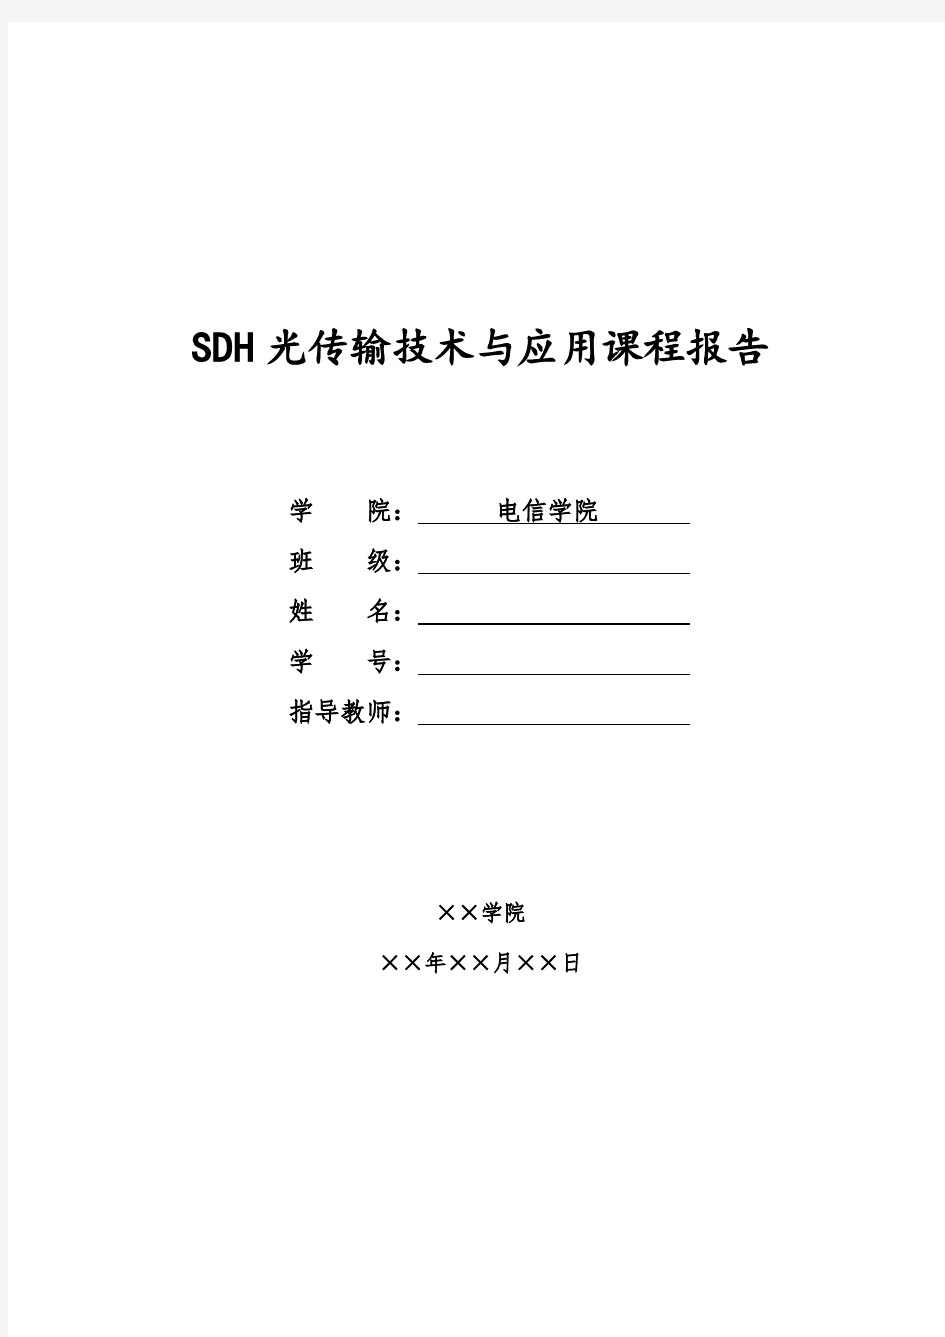 SDH光传输技术与应用课程实验报告